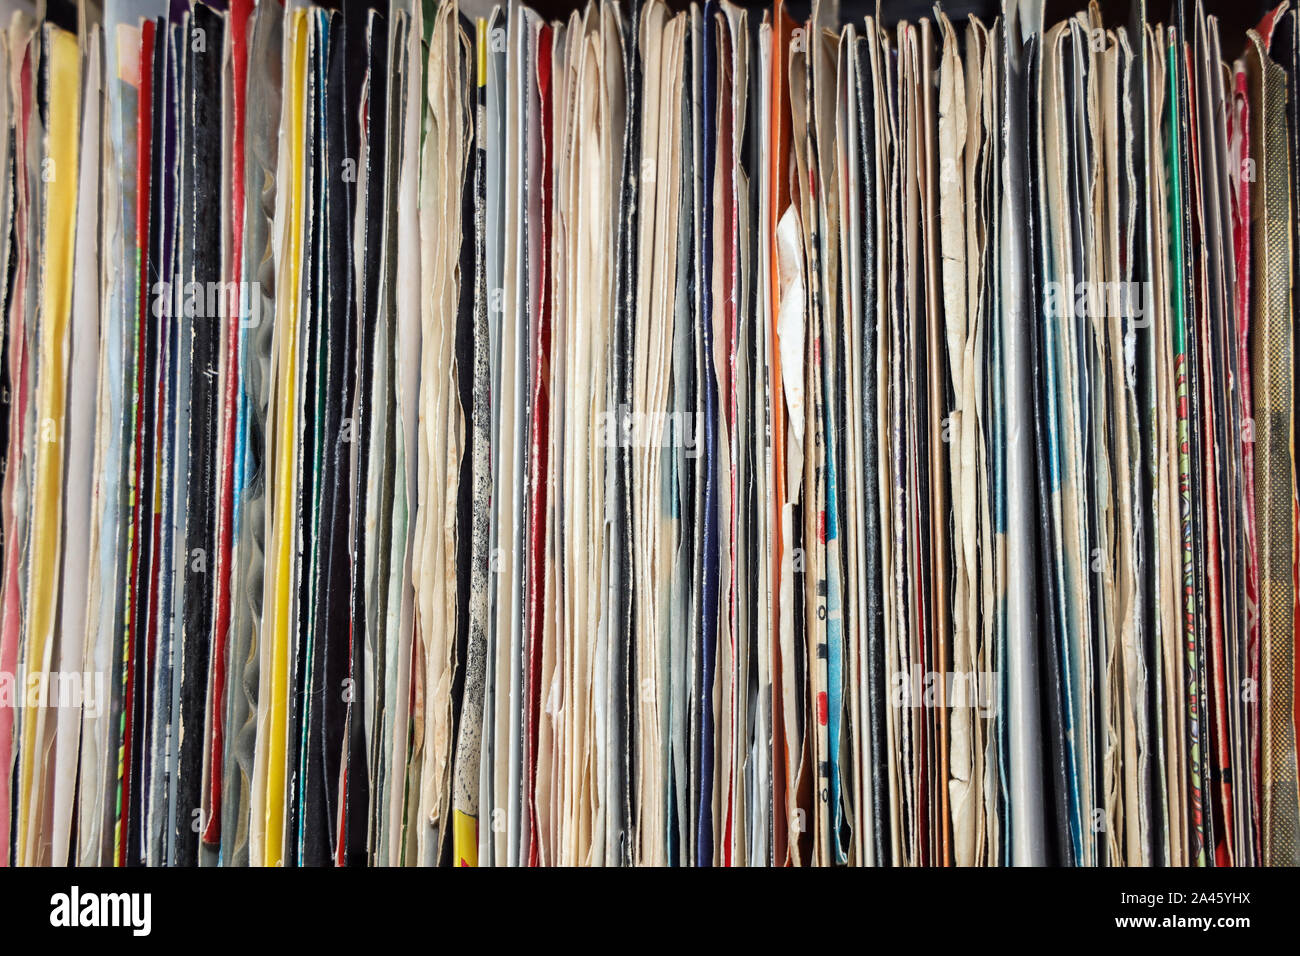 Singles 7" Vinyl records Stockfoto